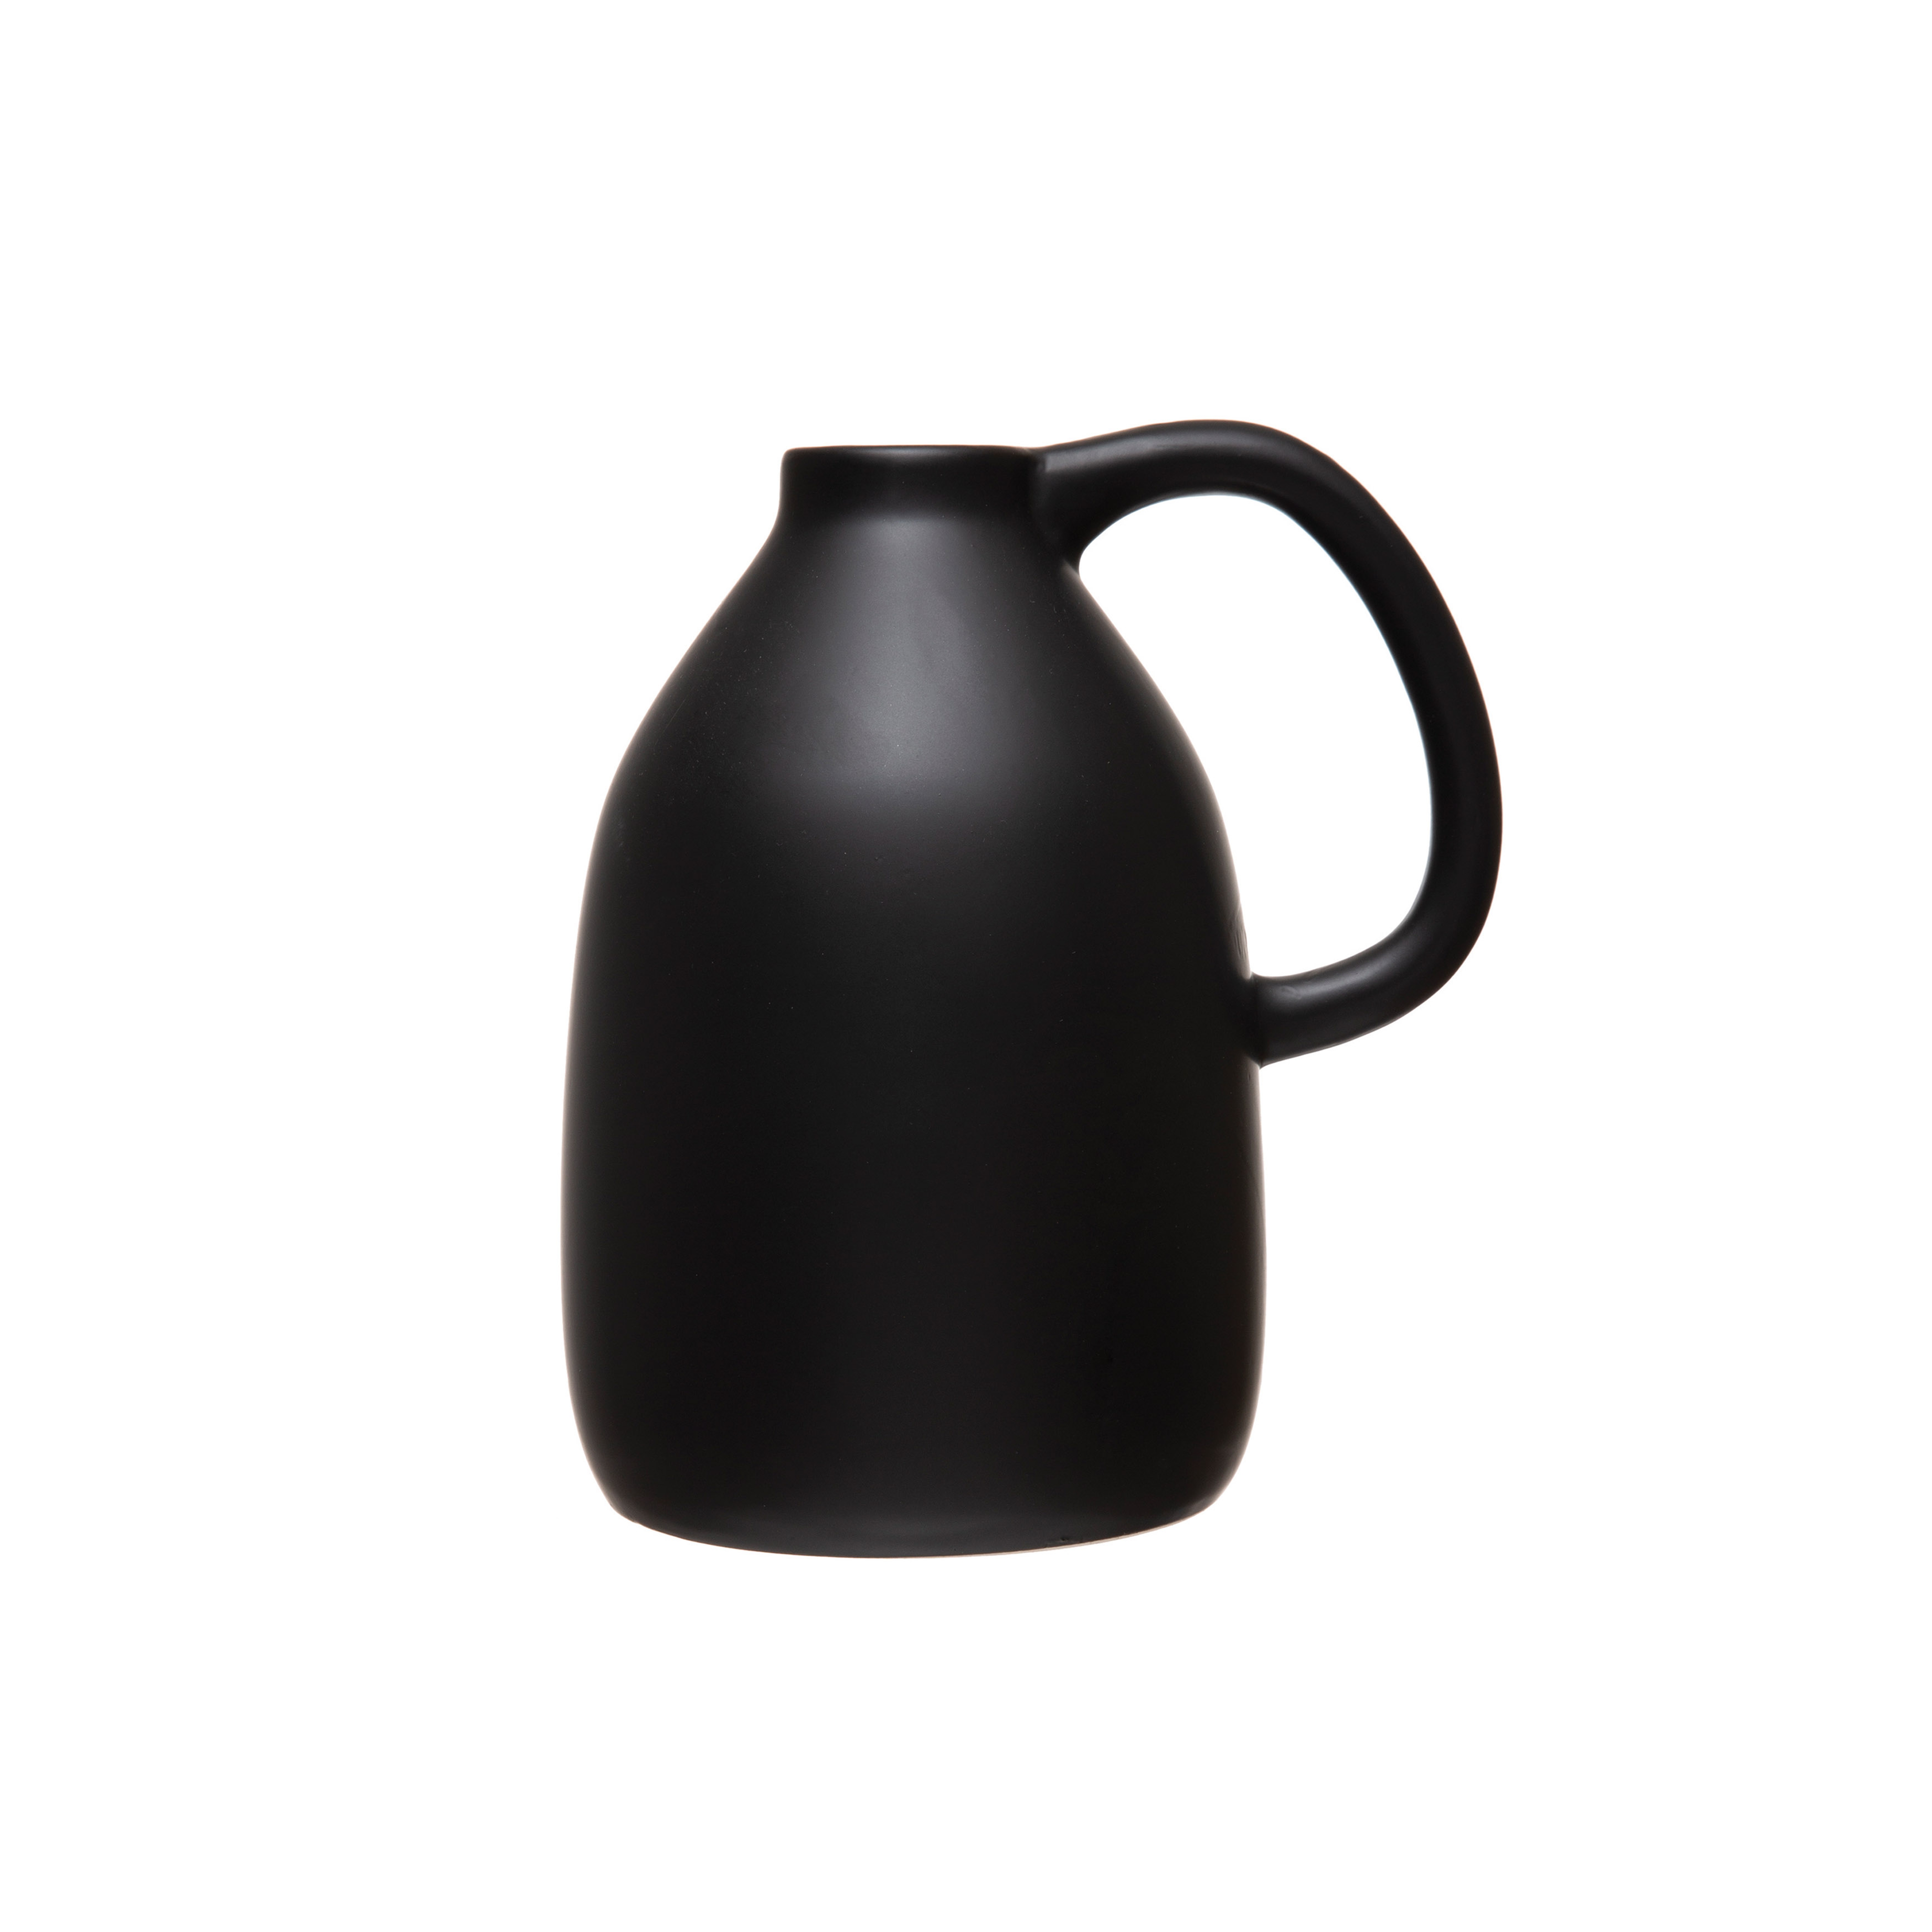 Ceramic Vase with Handle, Matte Black - Nomad Home